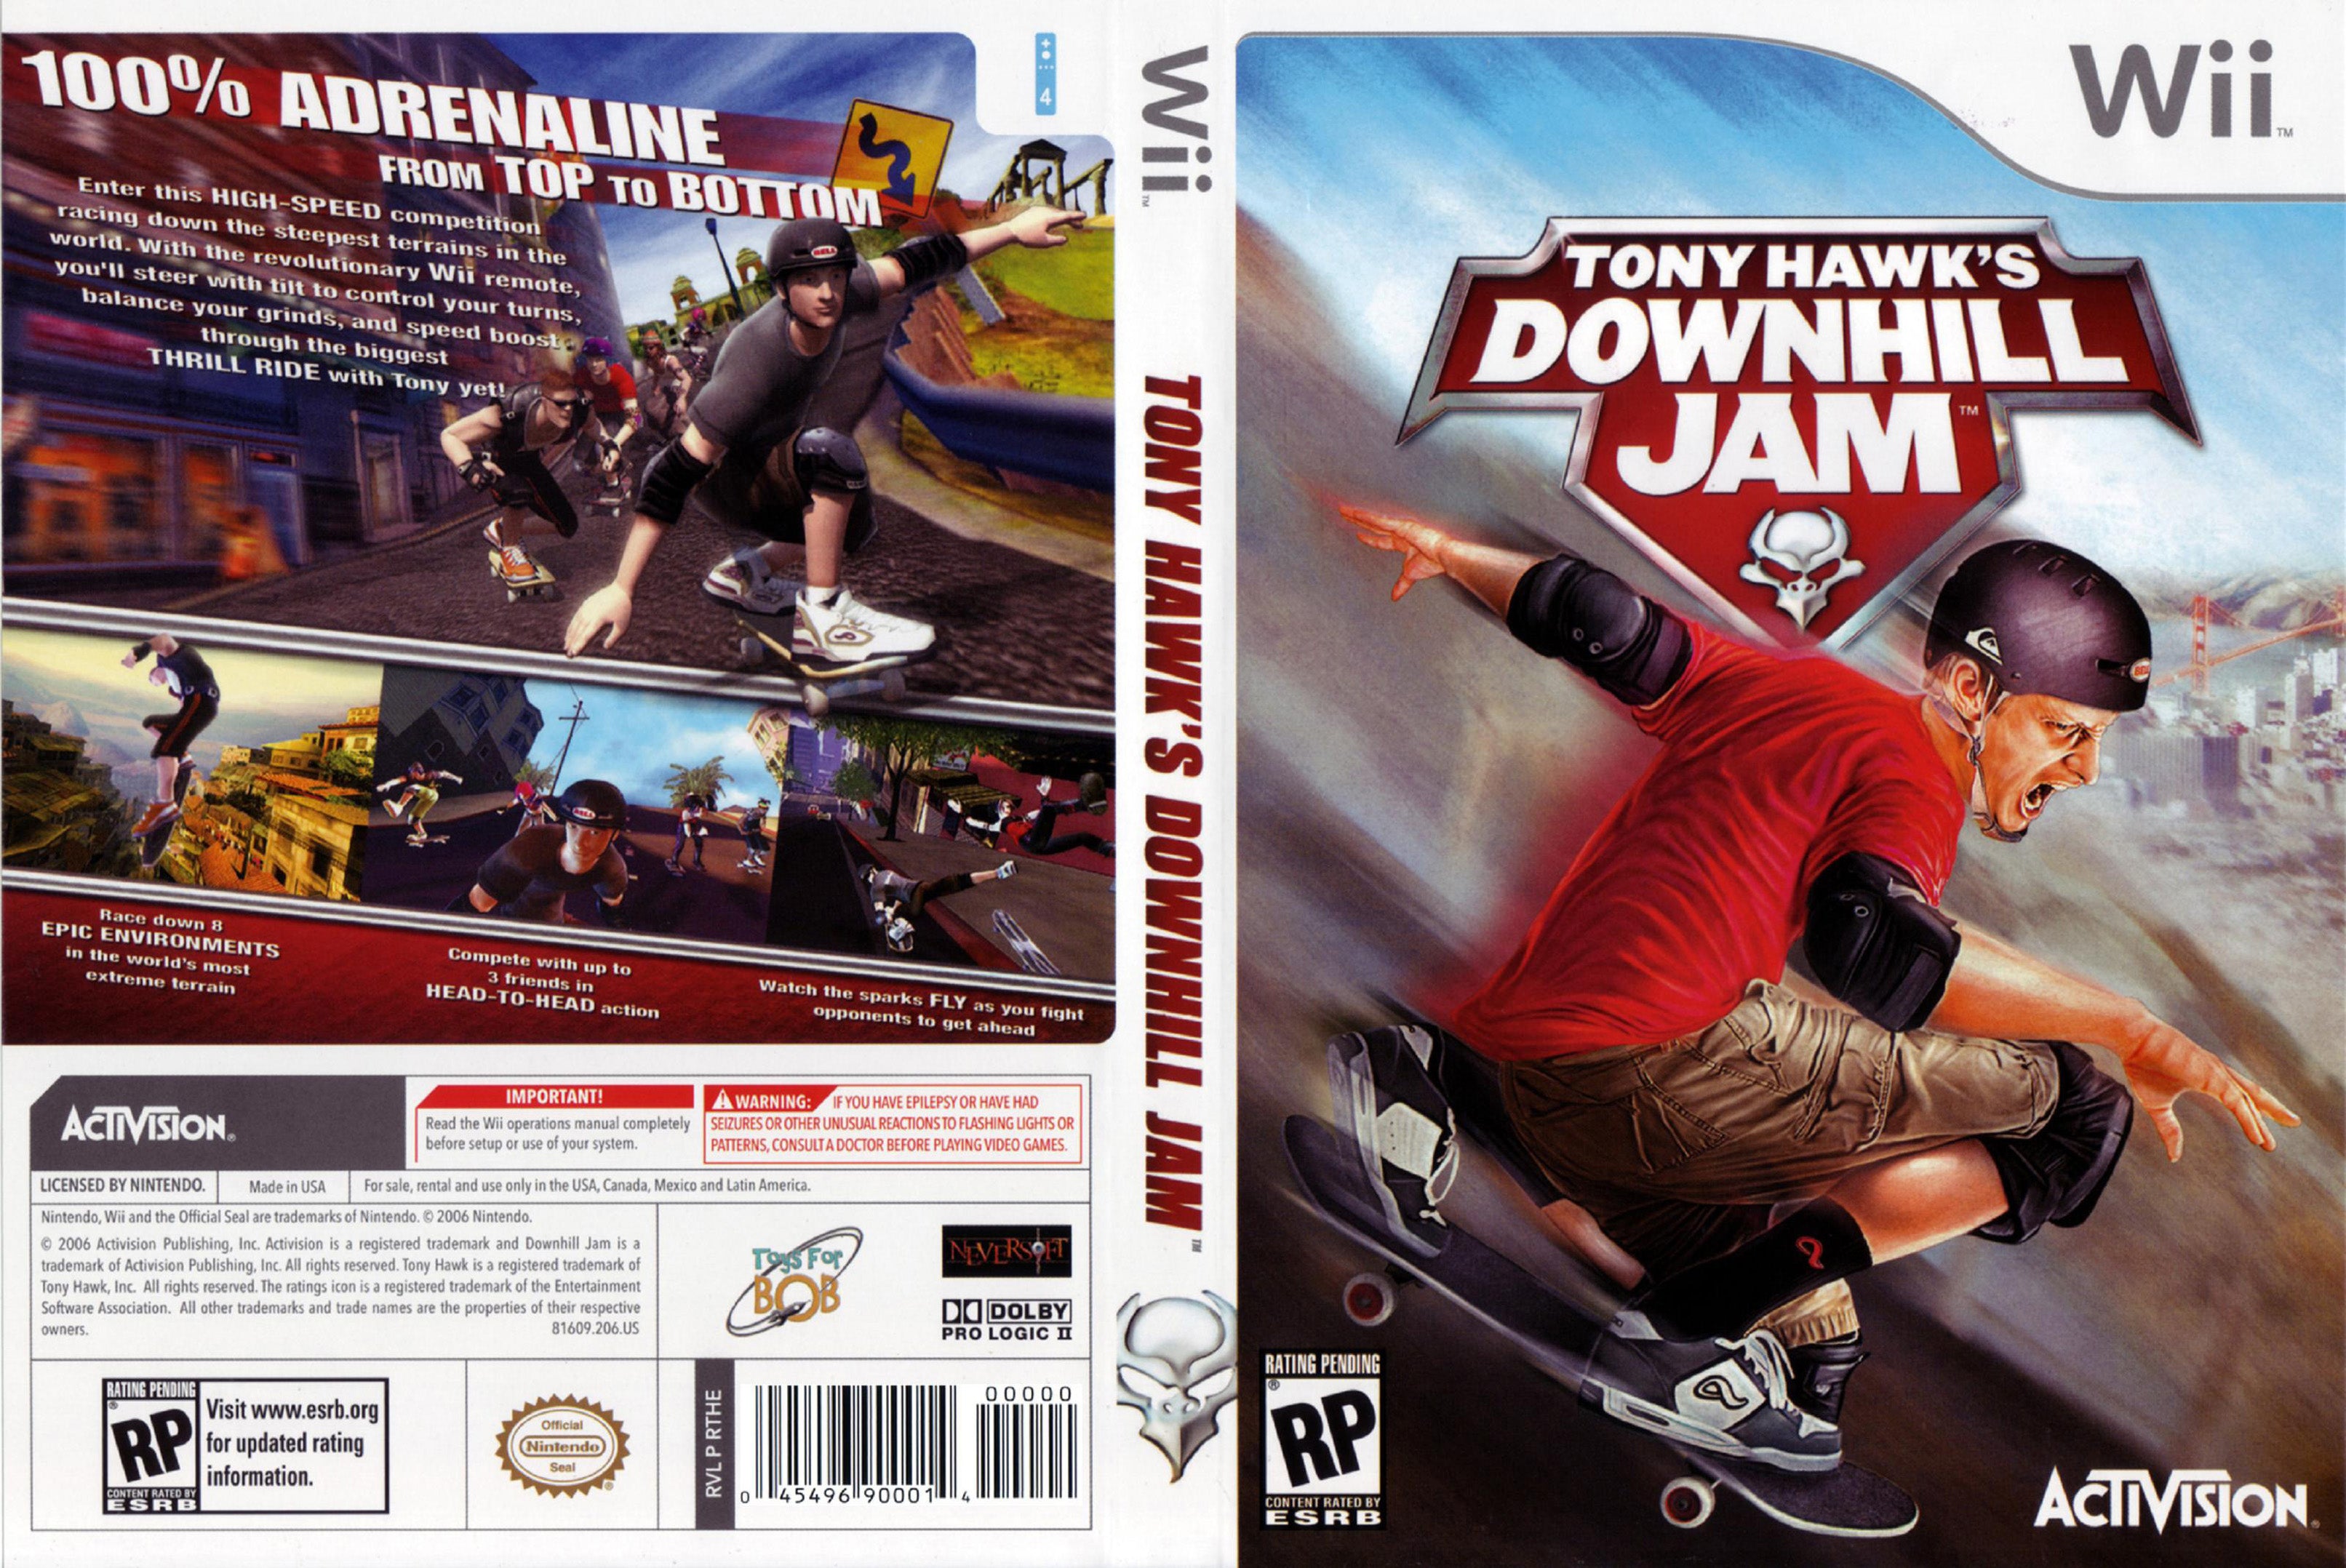 Tony Hawk's Downhill Jam trailers